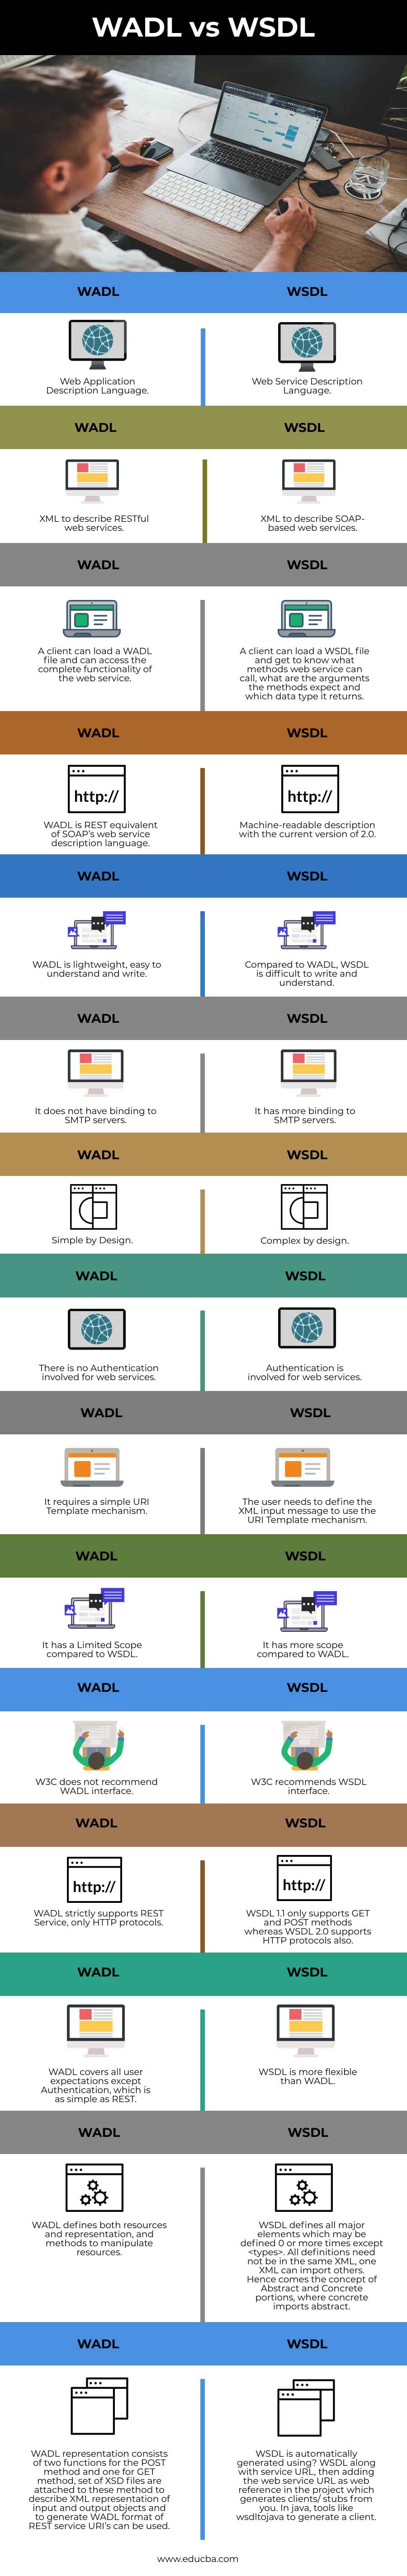 WADL vs WSDL info